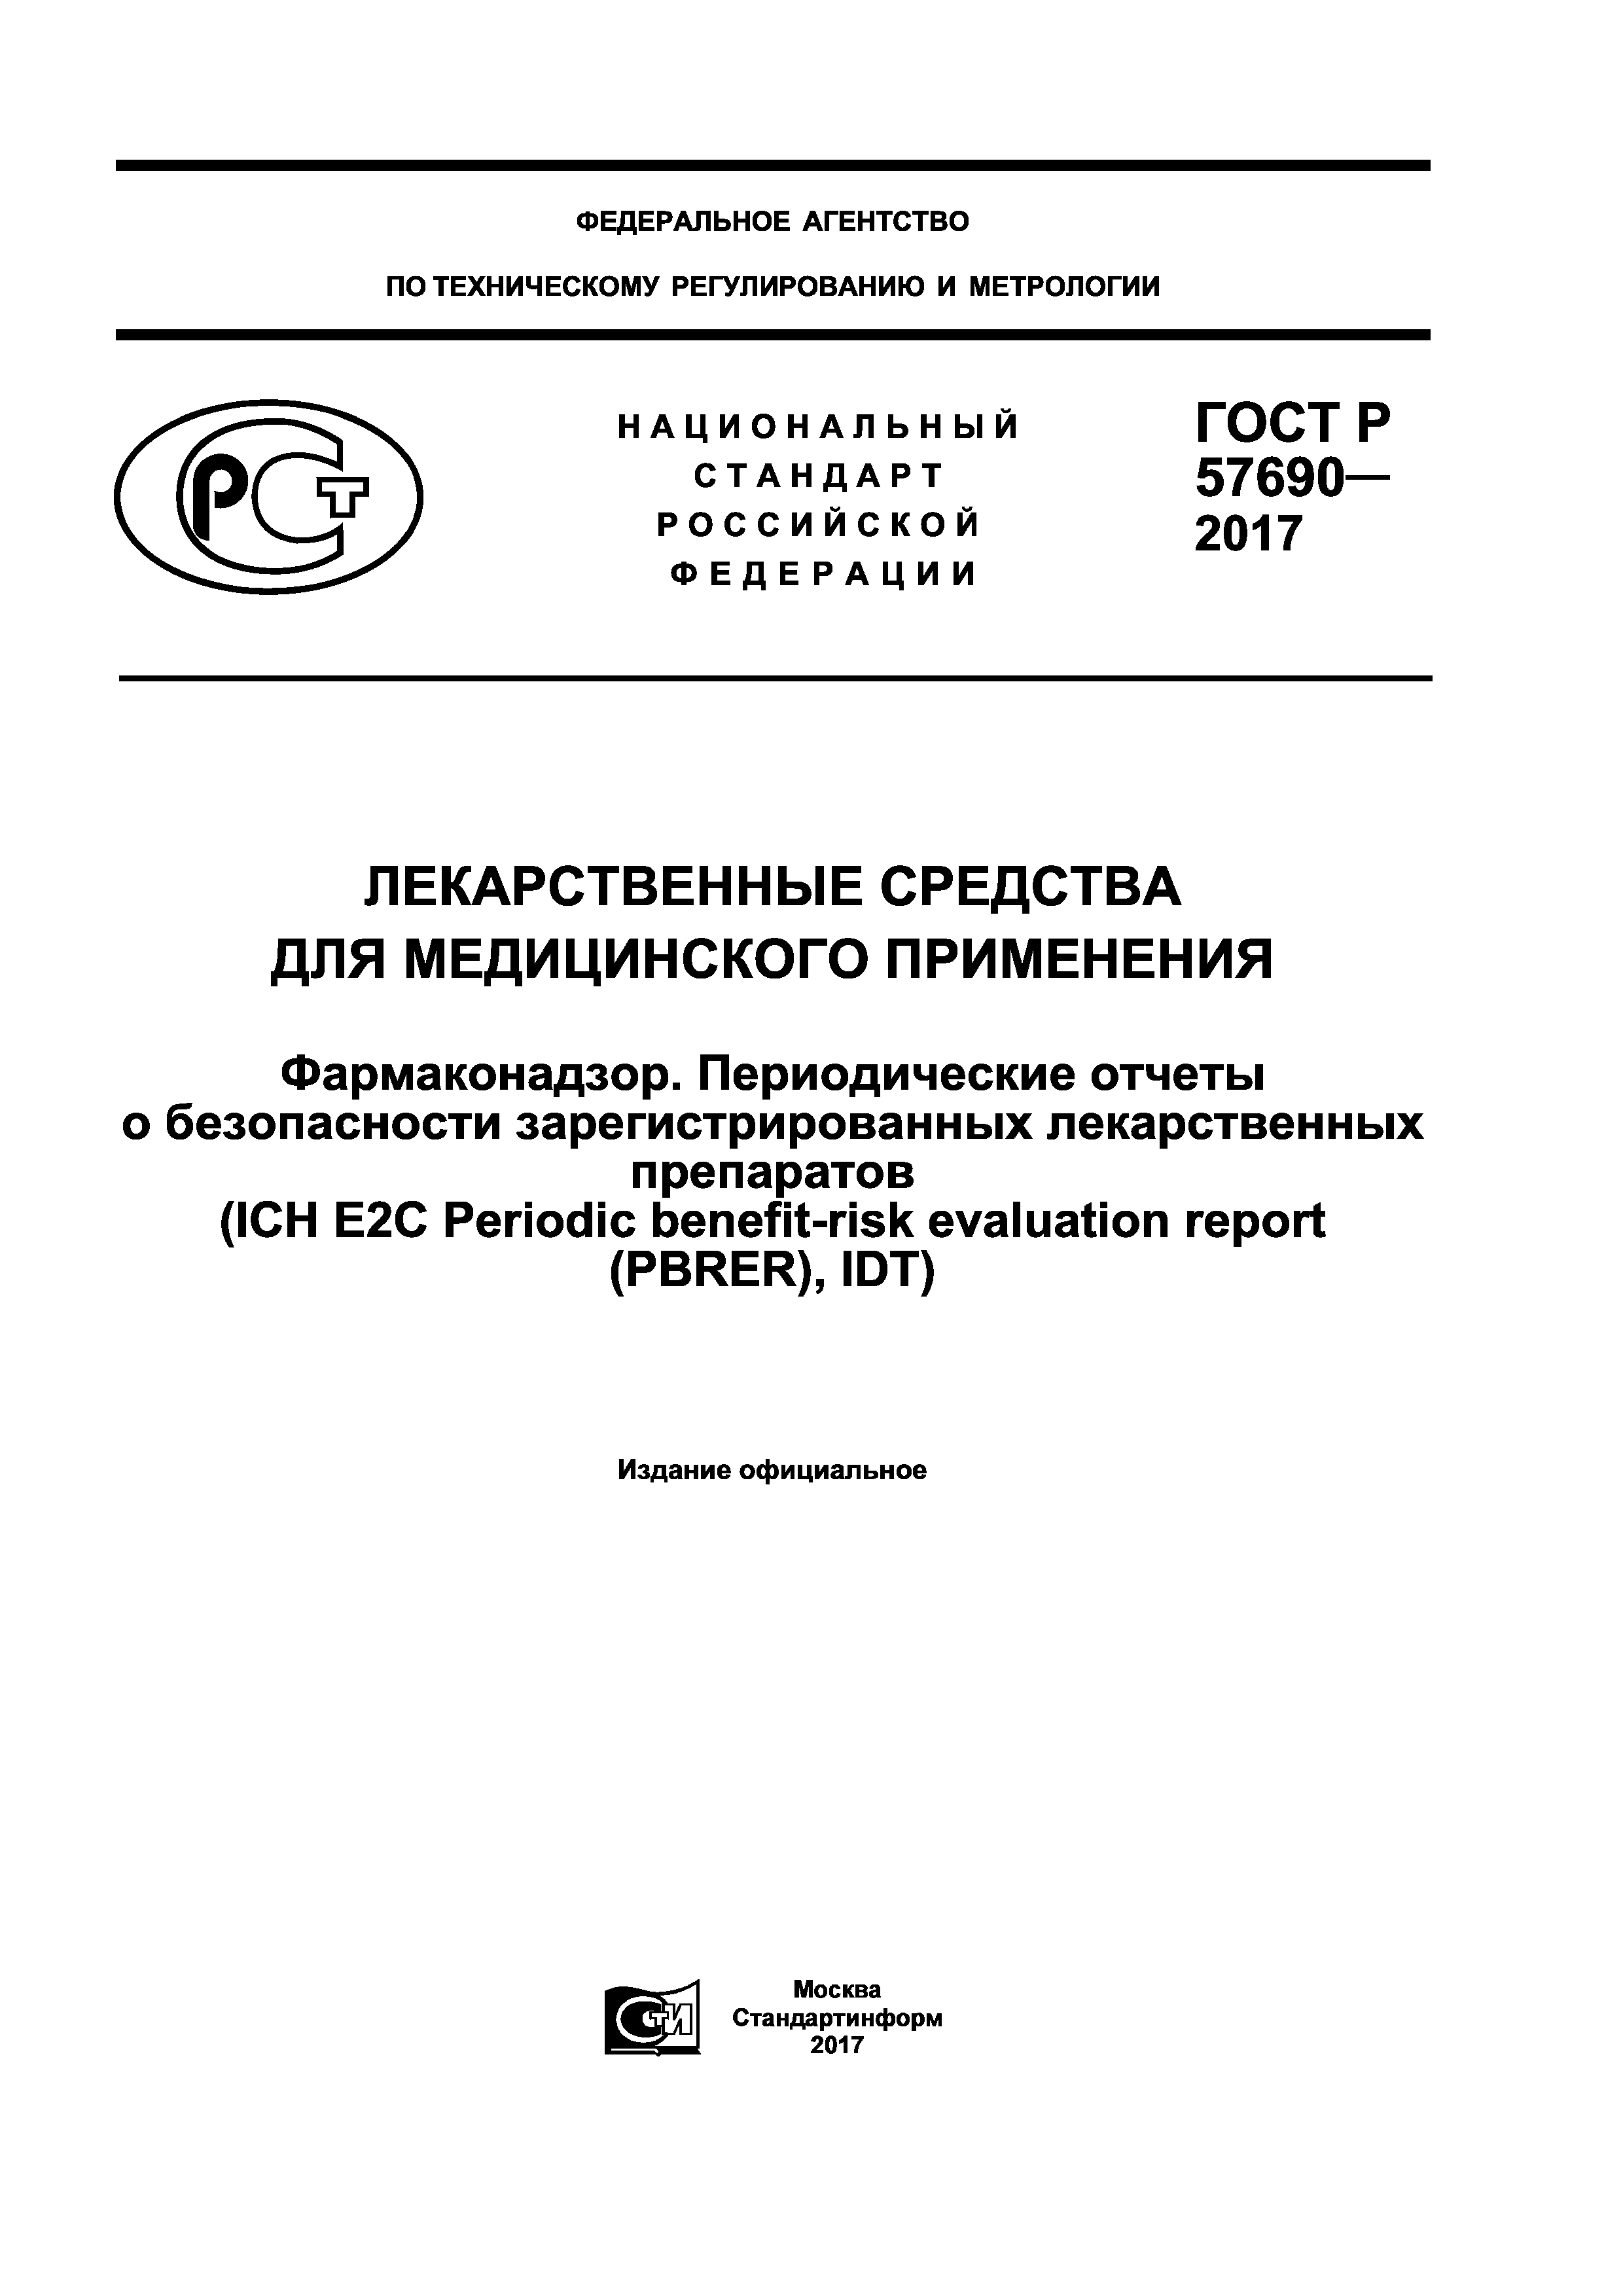 ГОСТ Р 57690-2017